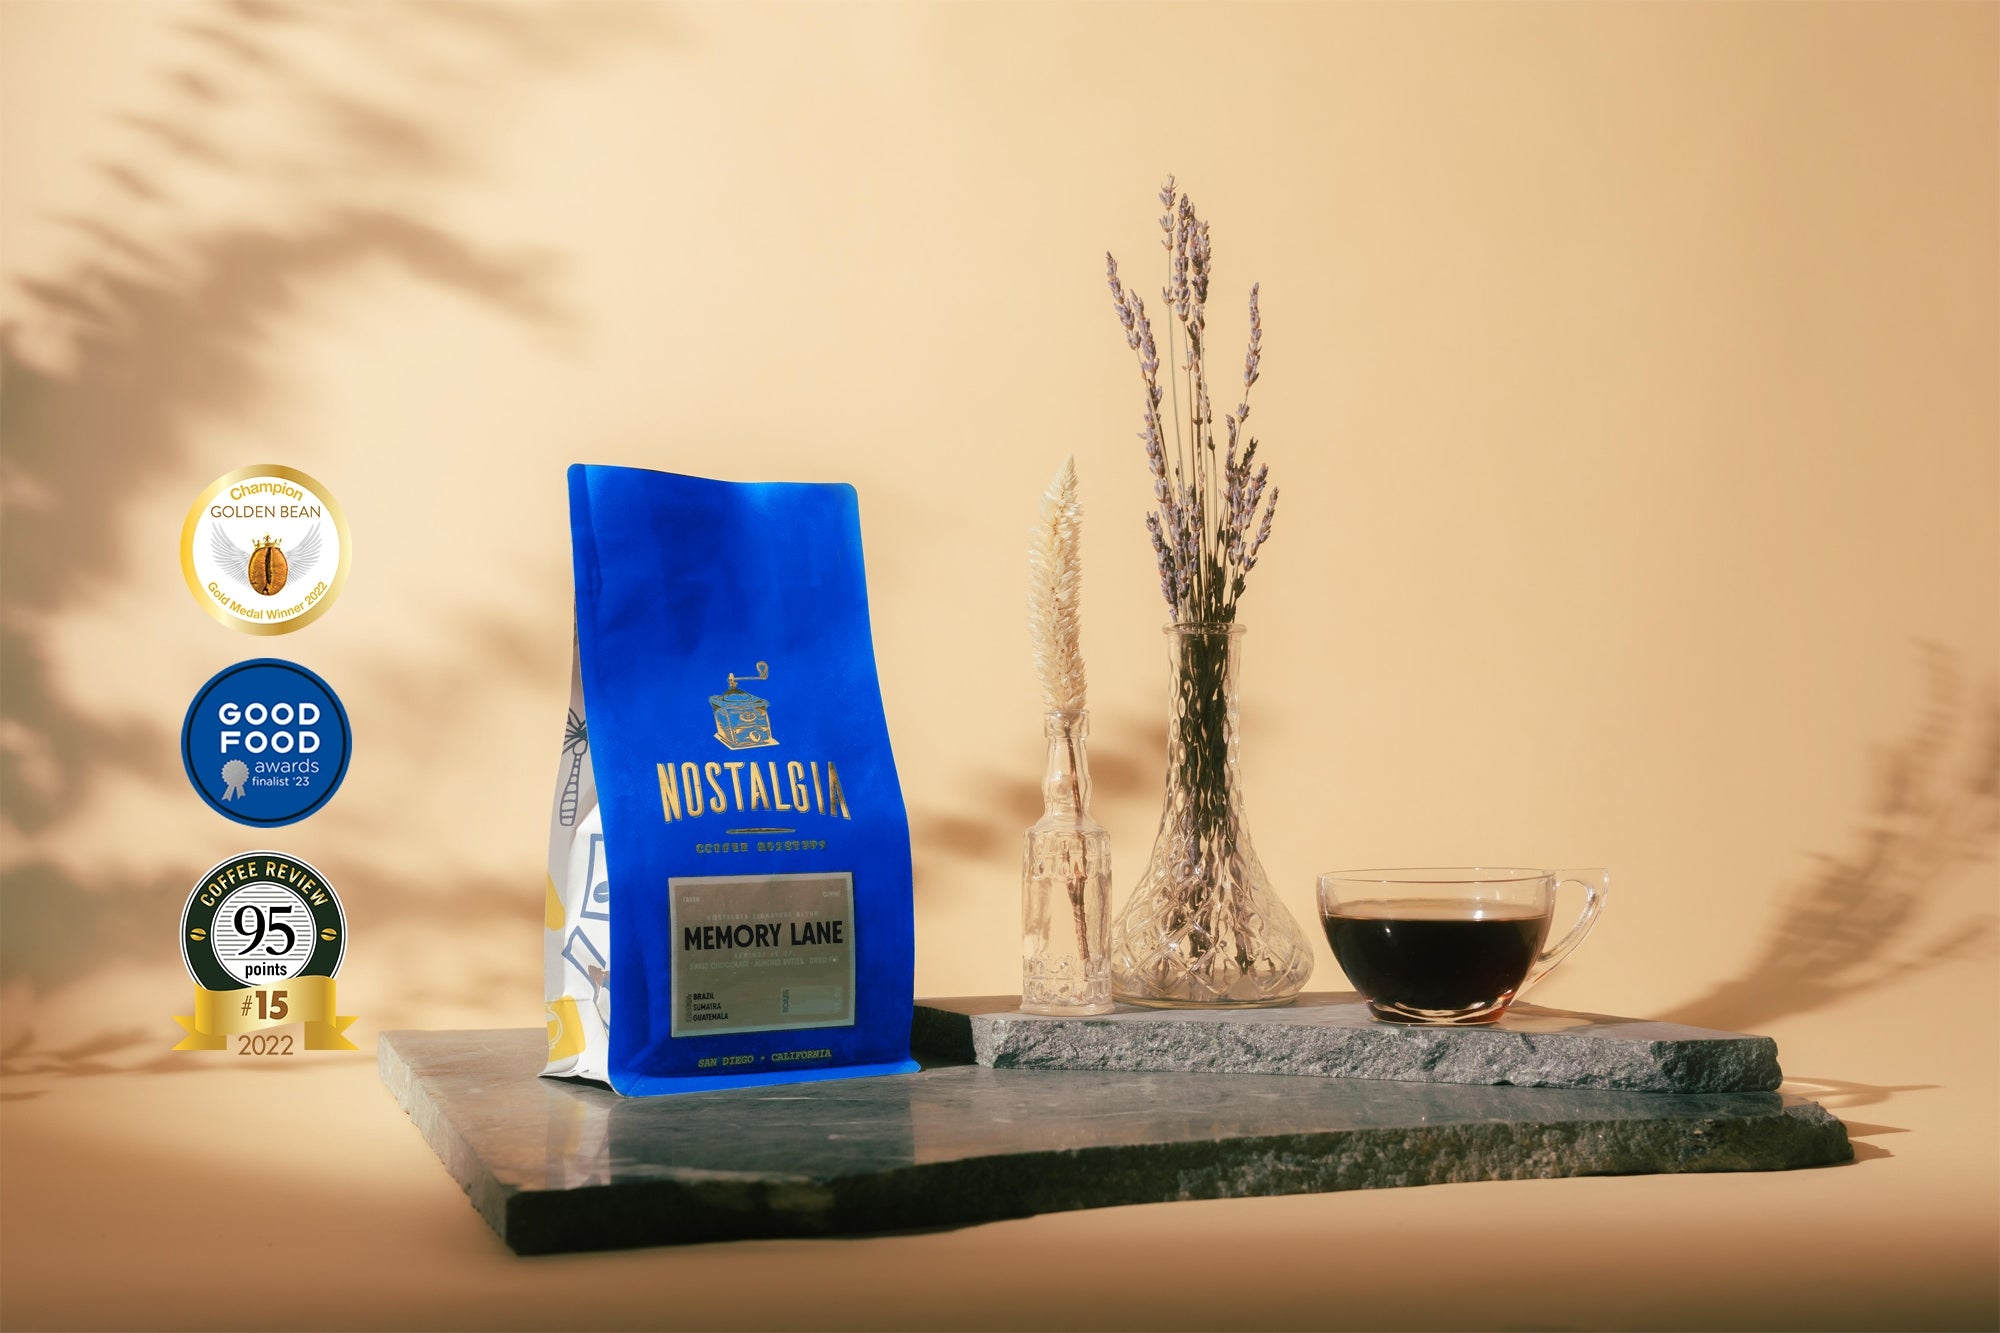 Nostalgia Coffee, winner/finalist of Golden Bean, Coffee Score #15 in 2022, and Good Food awards.